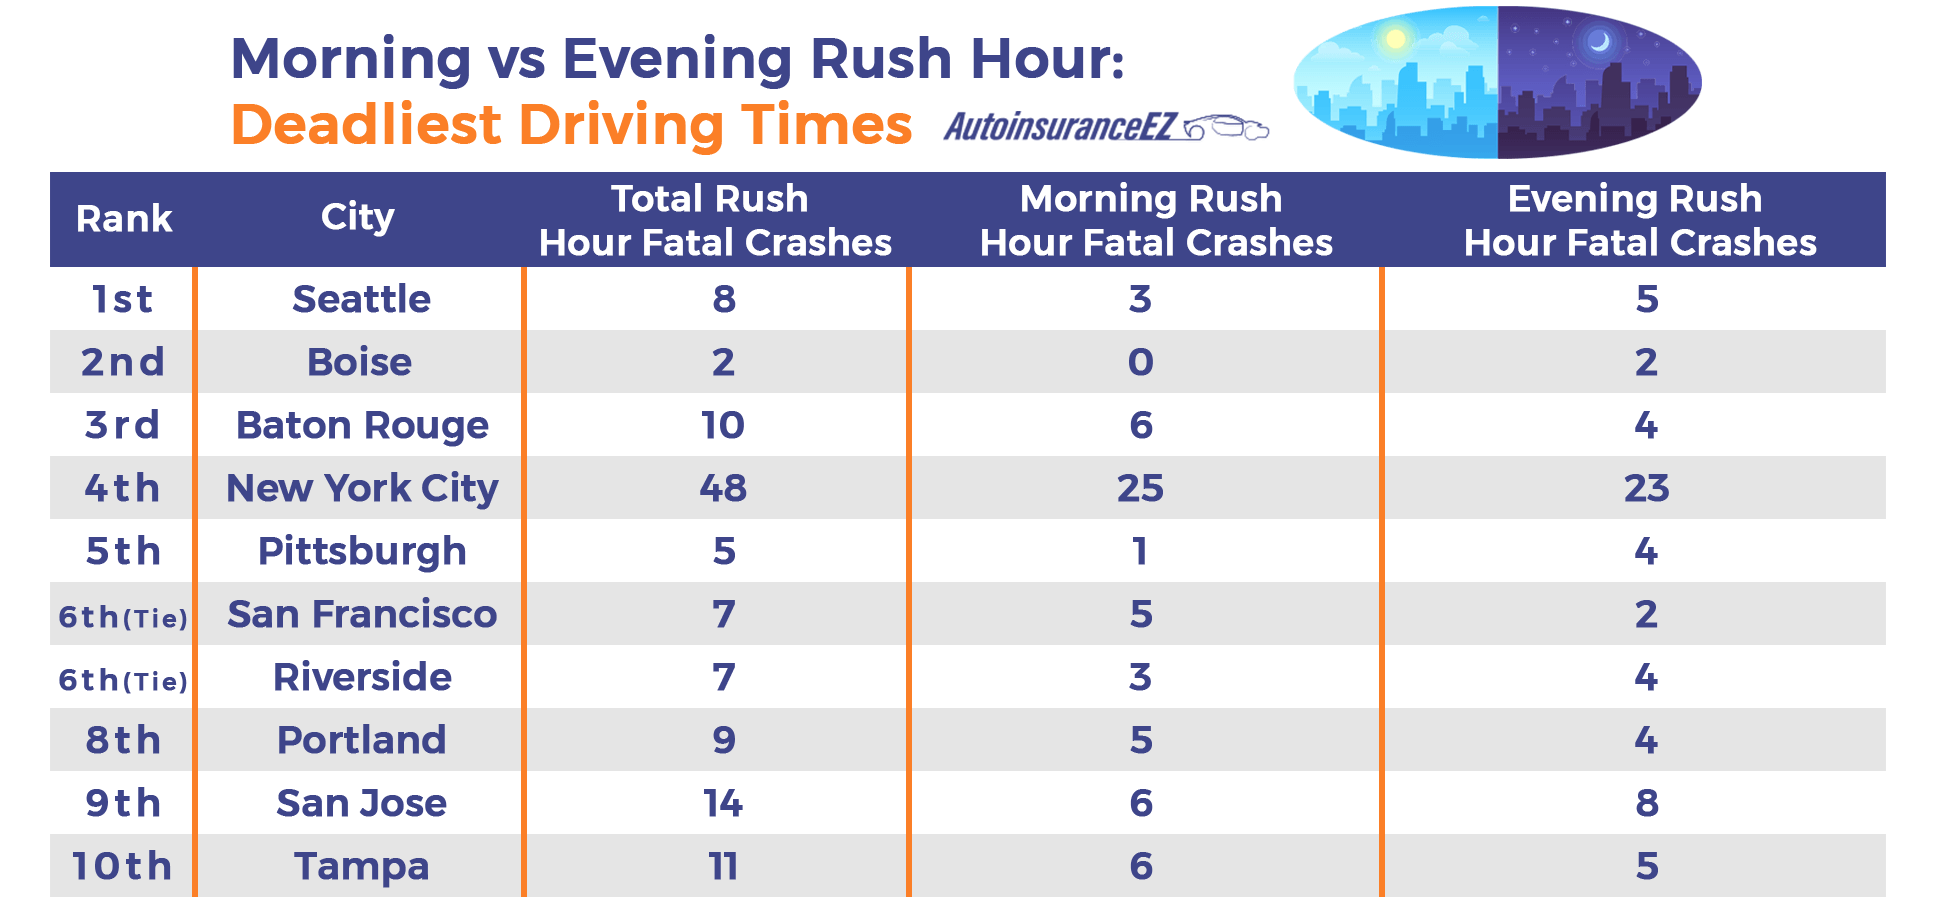 Morning vs Evening Rush Hour Deadliest Driving Times